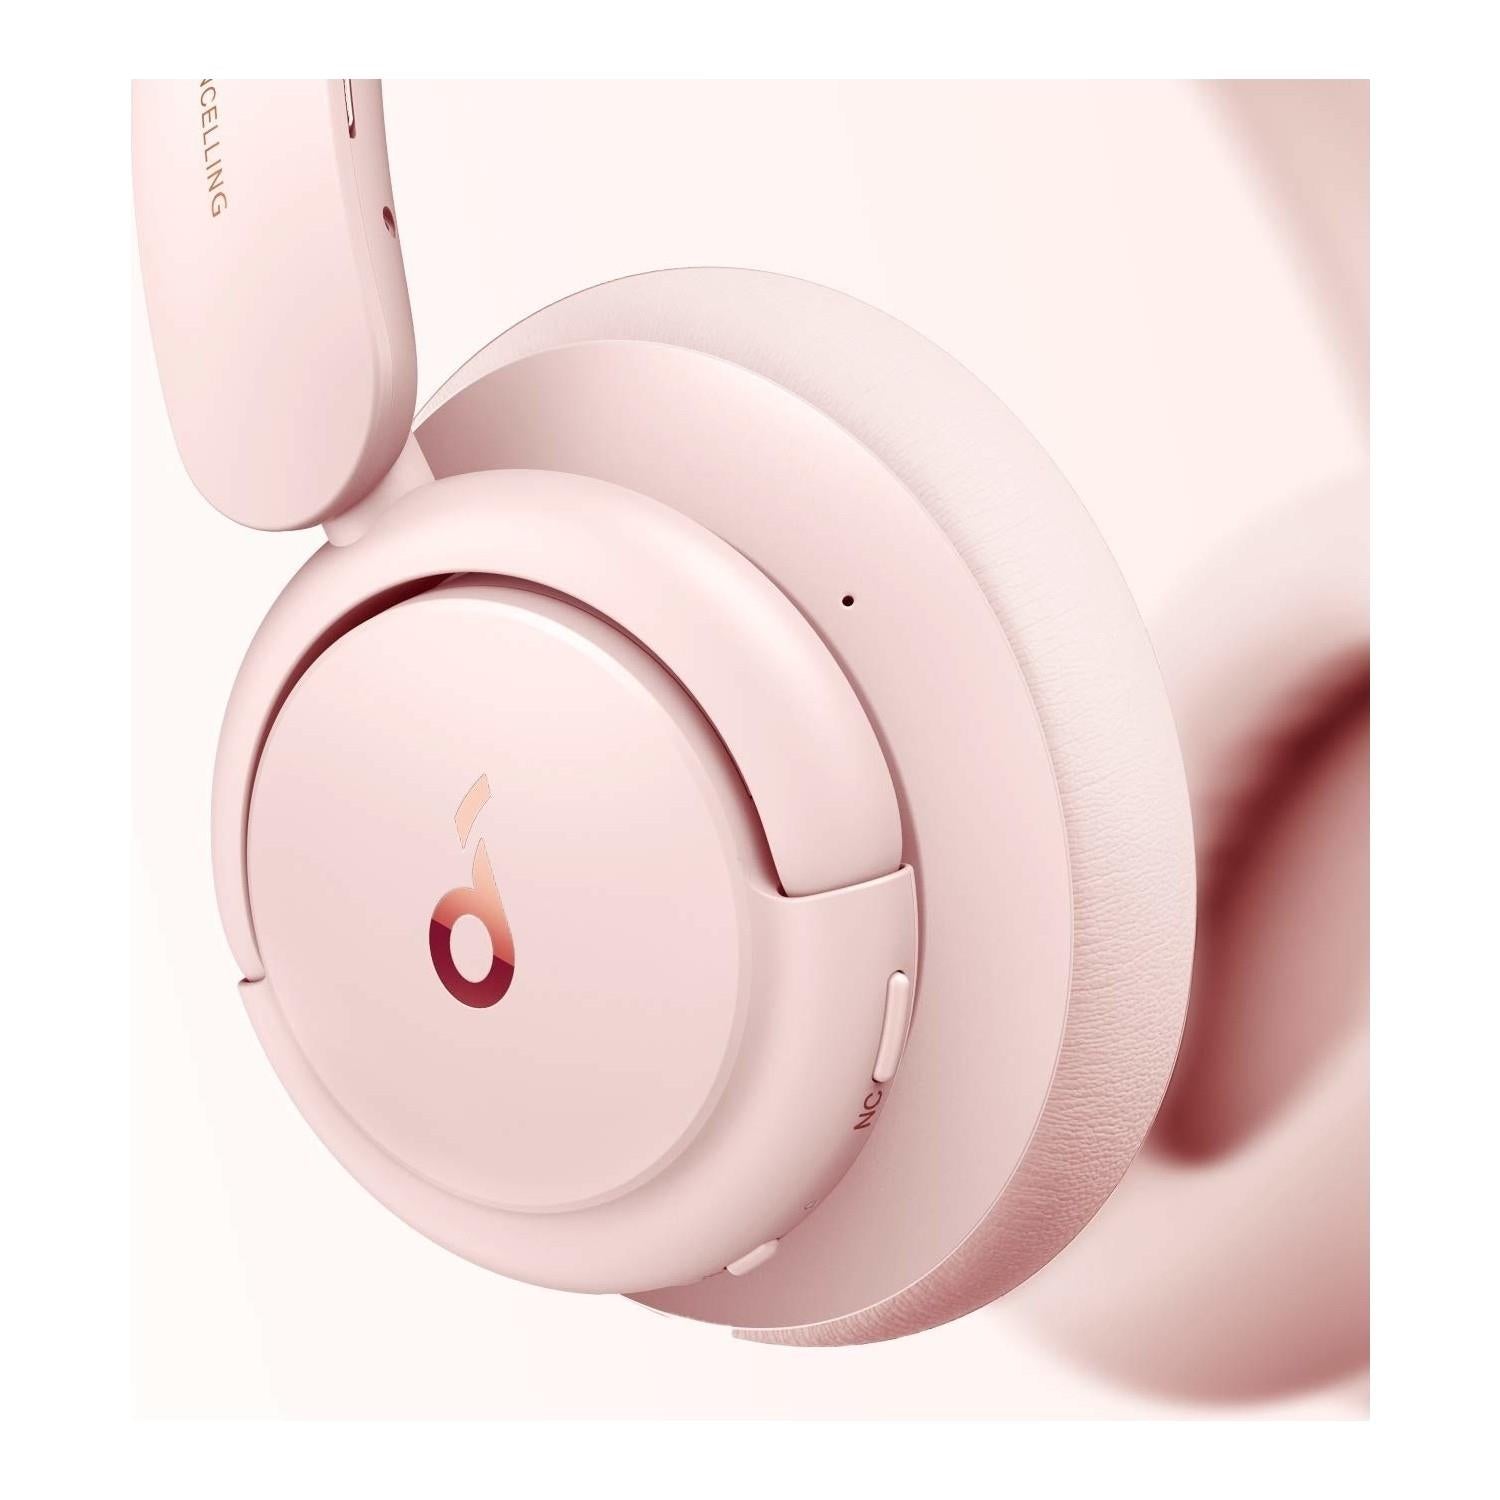 Anker Soundcore Life Q30 Bluetooth Headphones - Pink